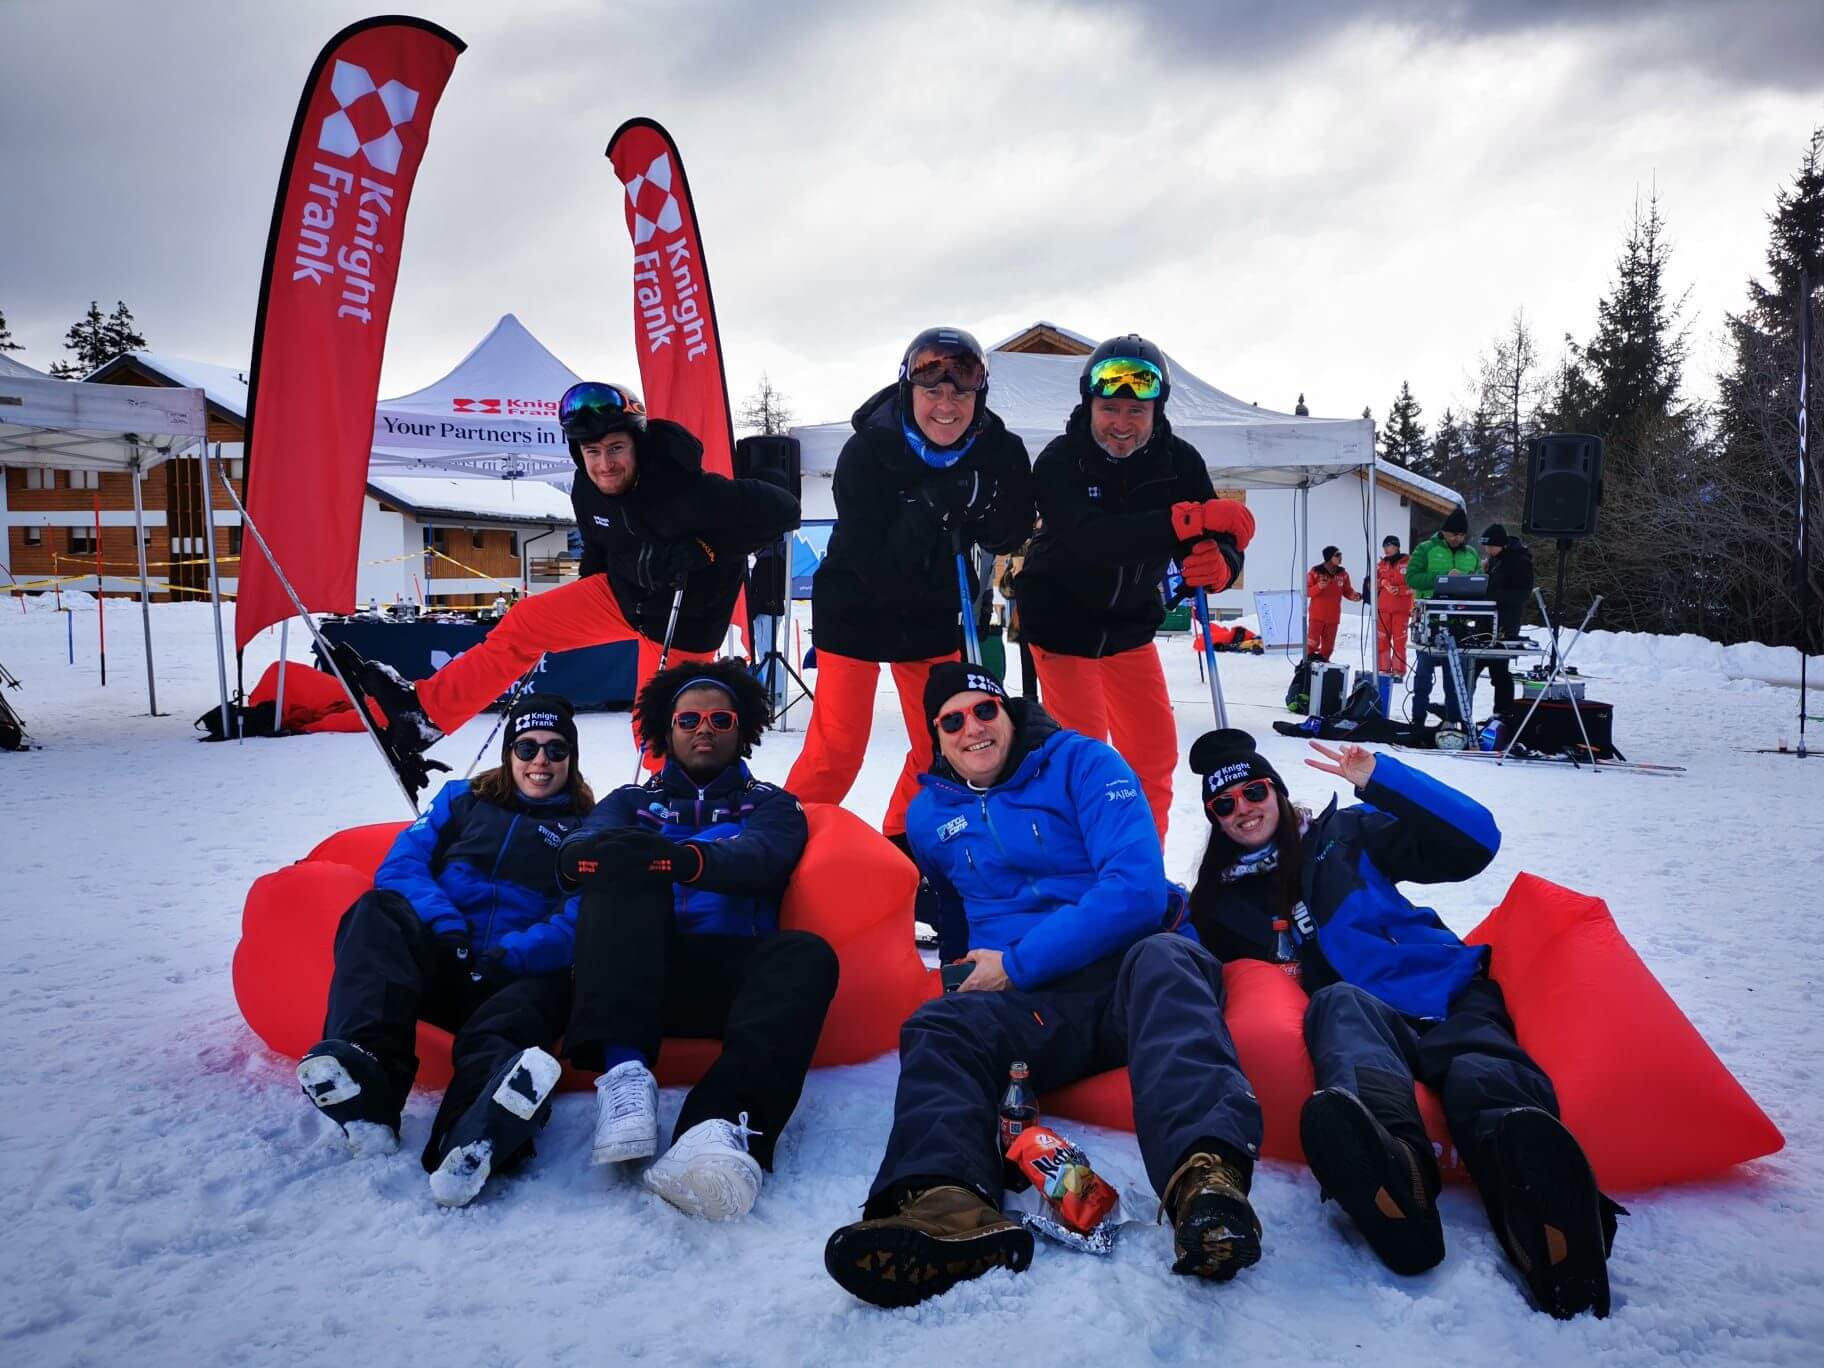 Snow Camp team at the Knight Frank City Ski Championships